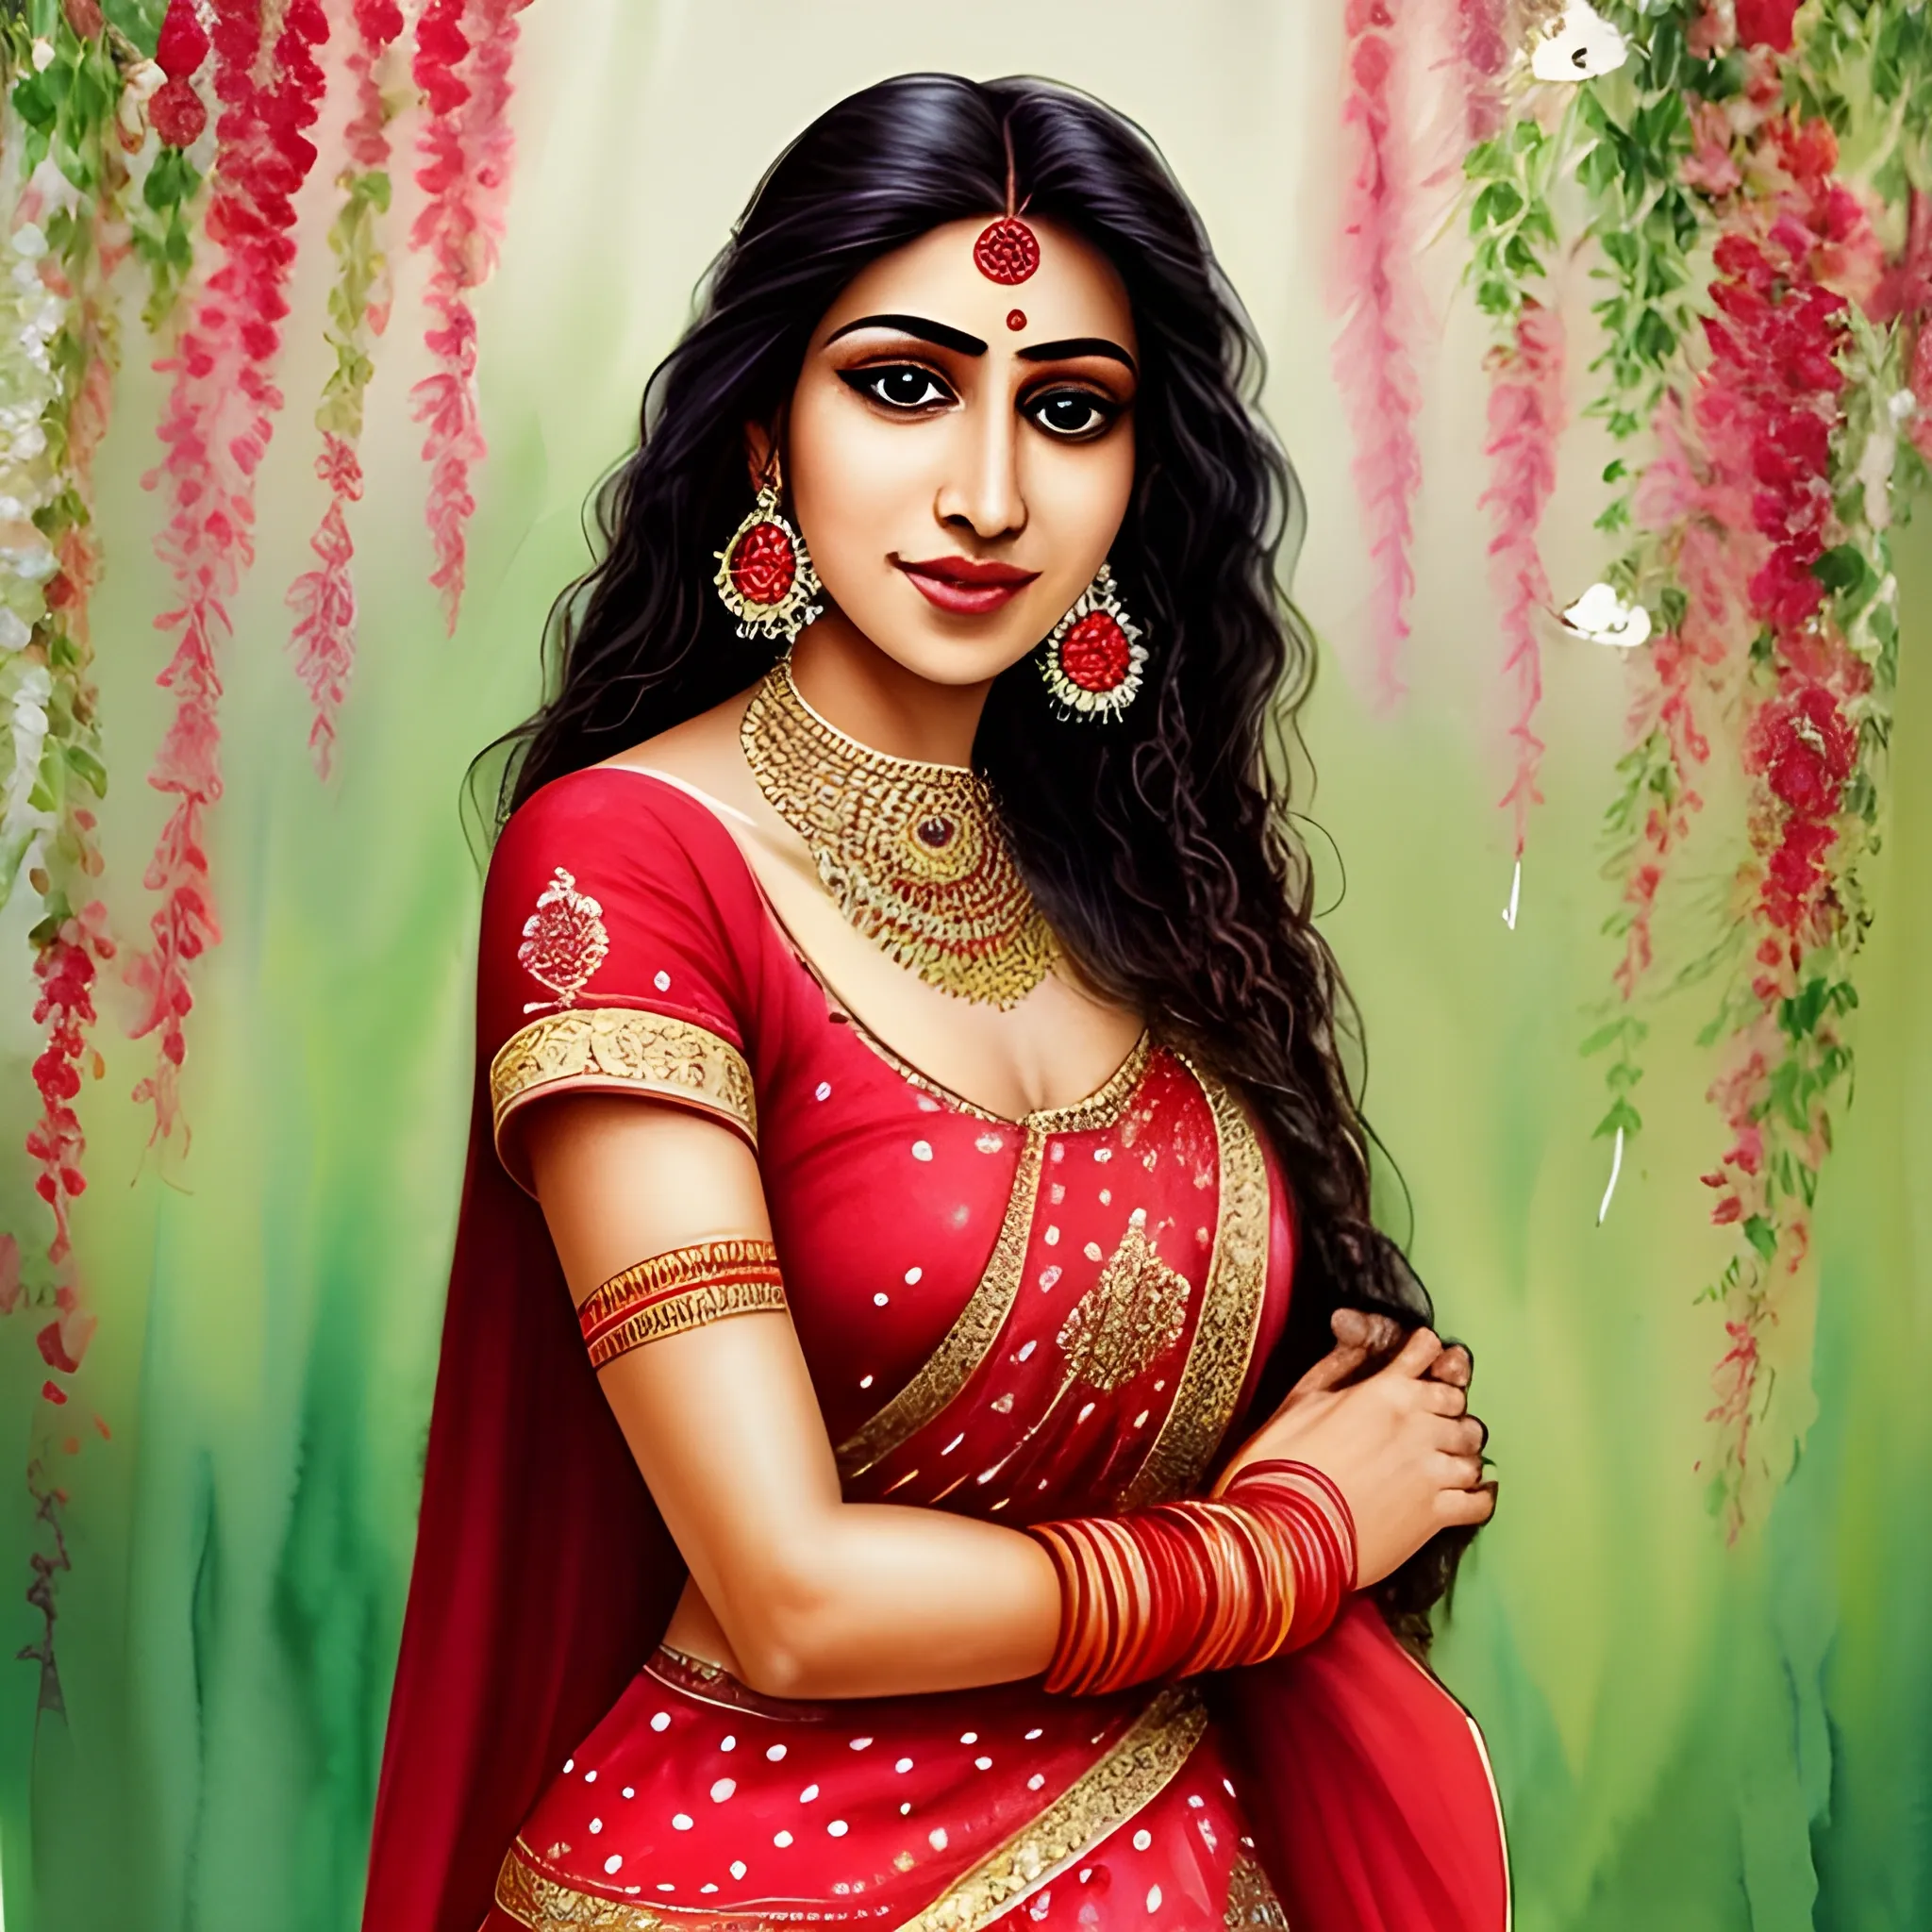 Beautiful Indian Style Dress for Women